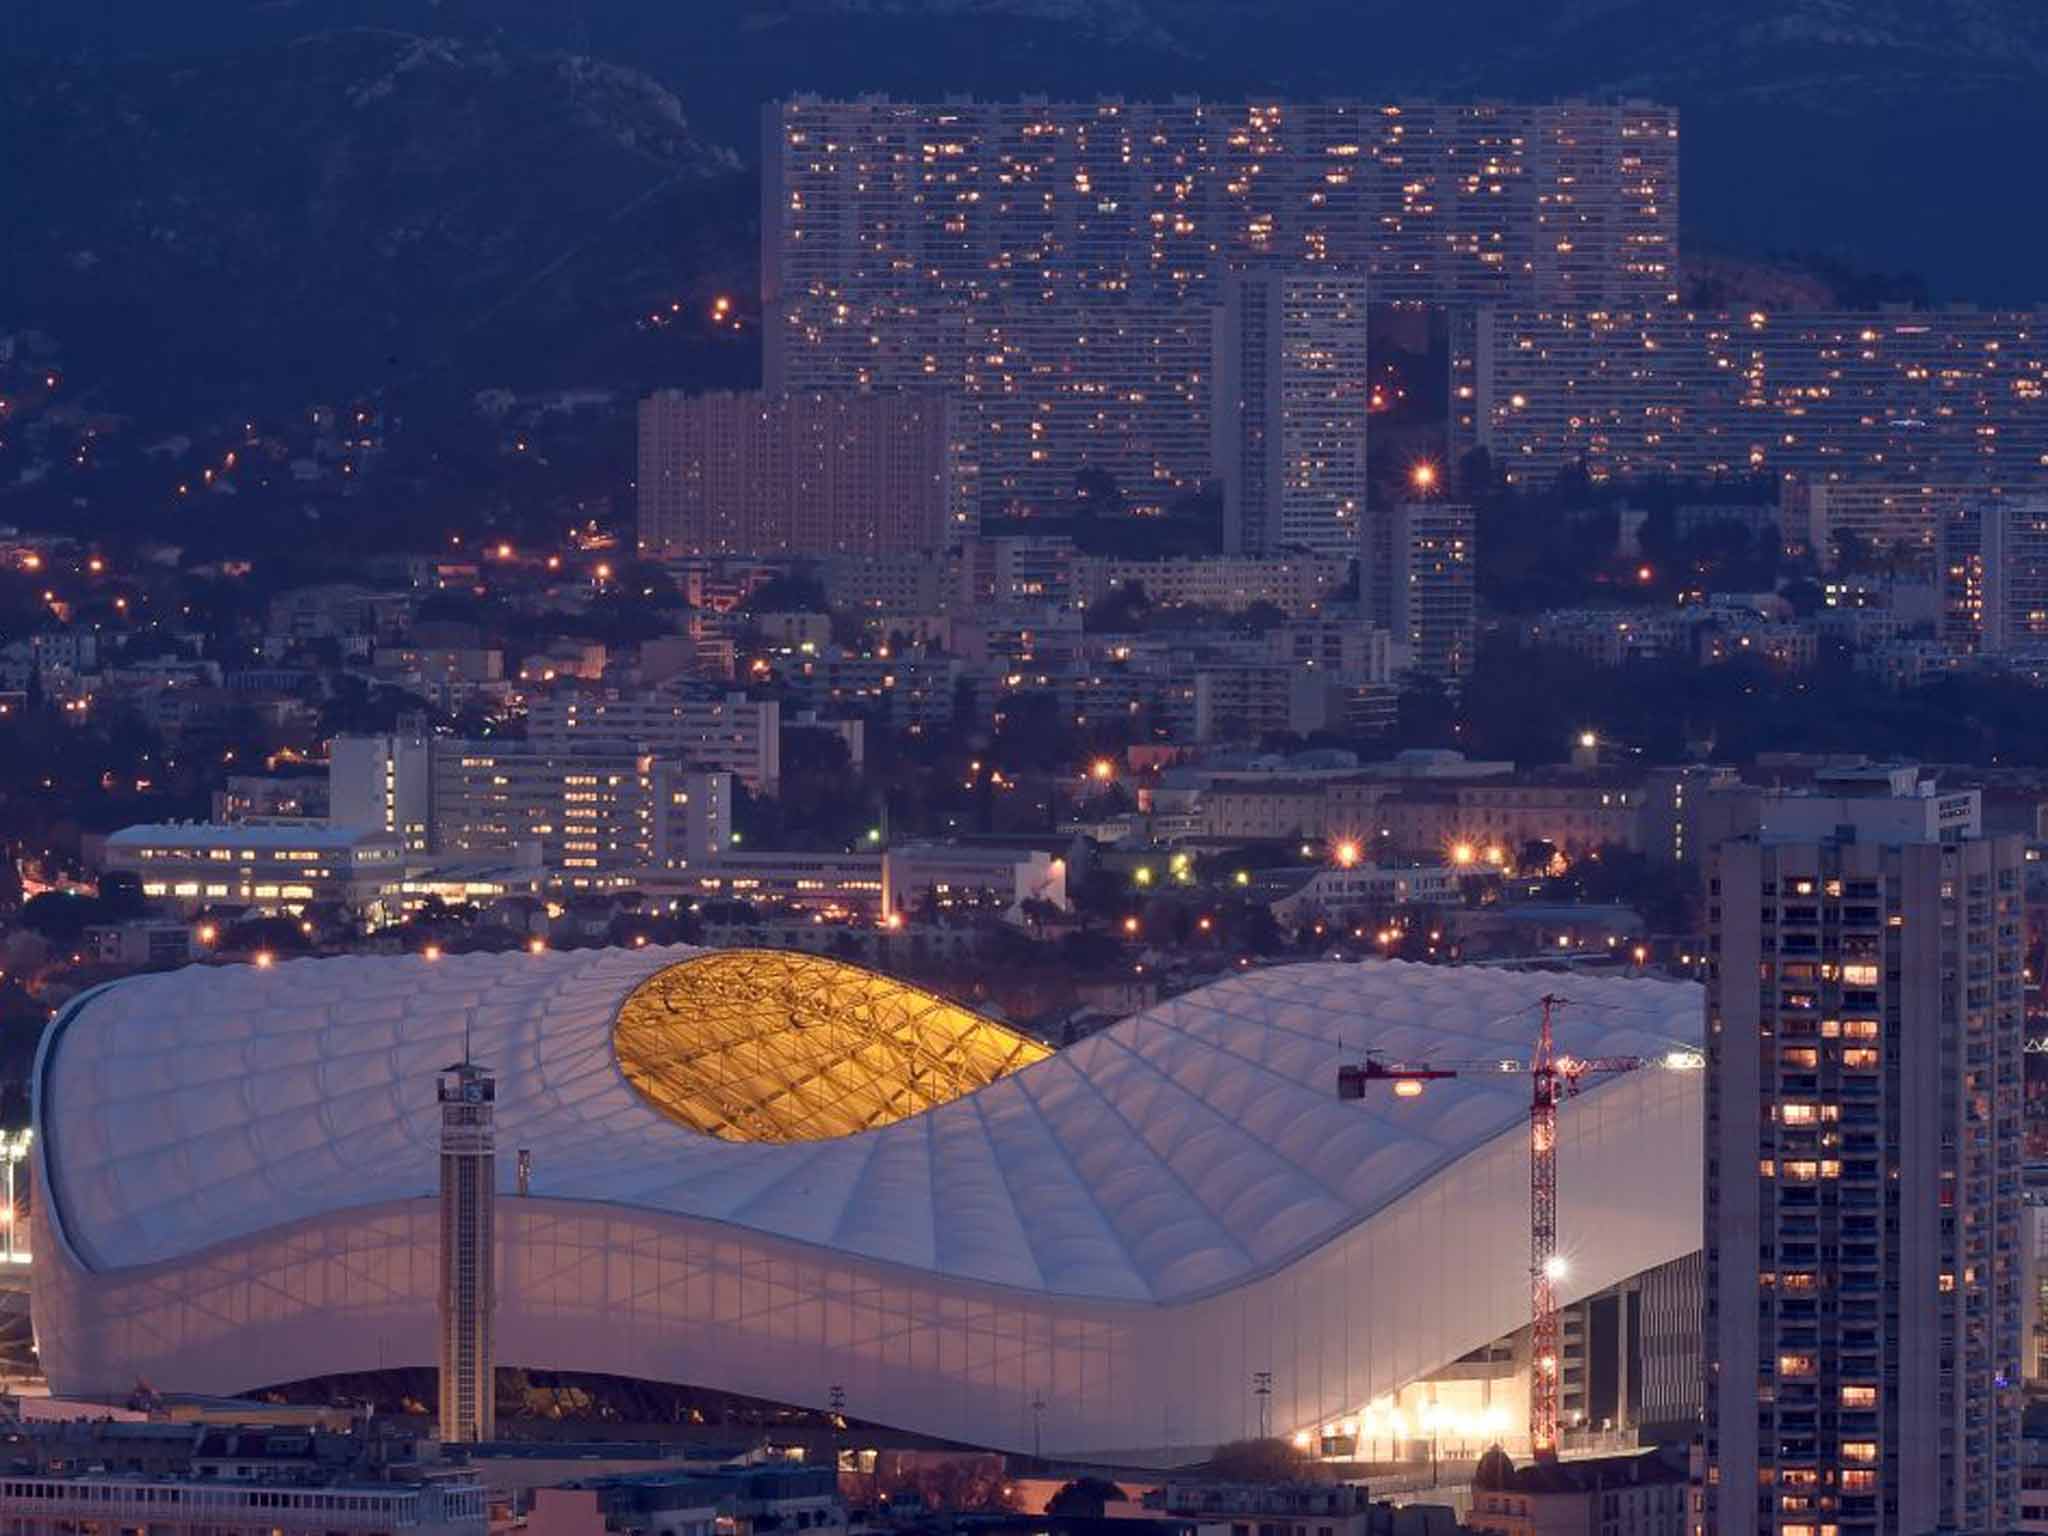 Marseille's Stade Vélodrome